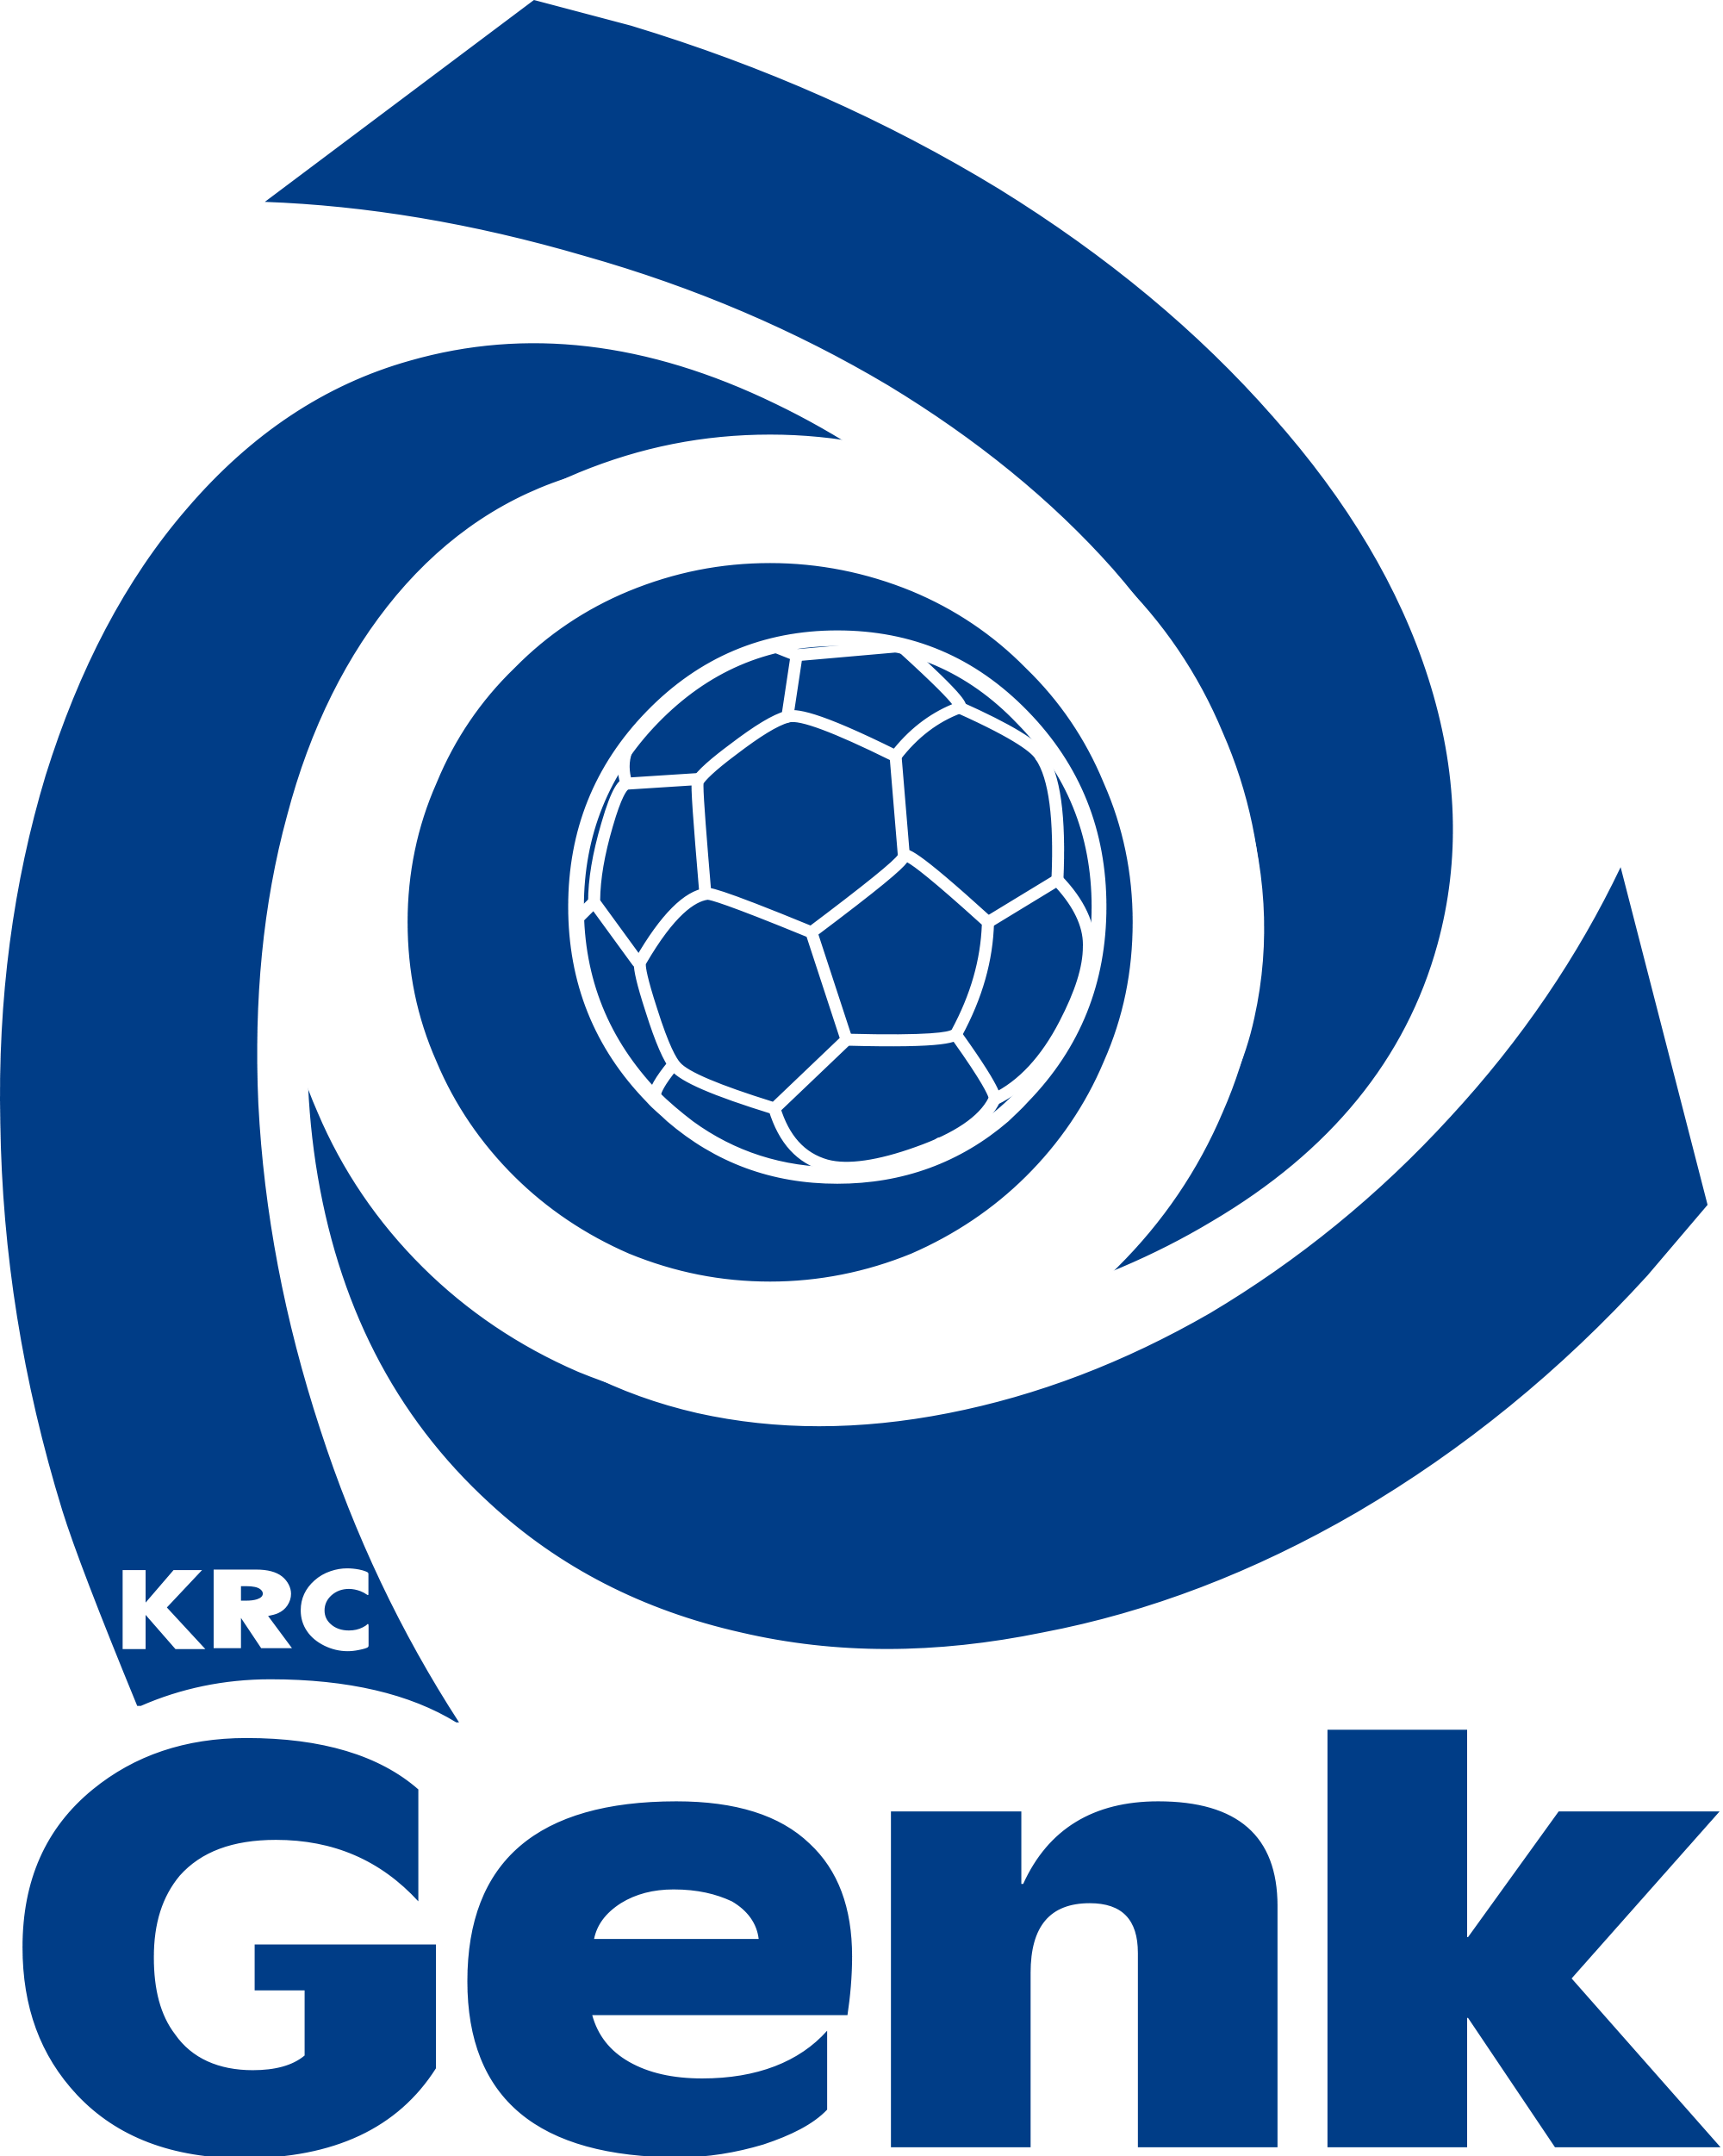 KRC Genk Logo Wallpaper